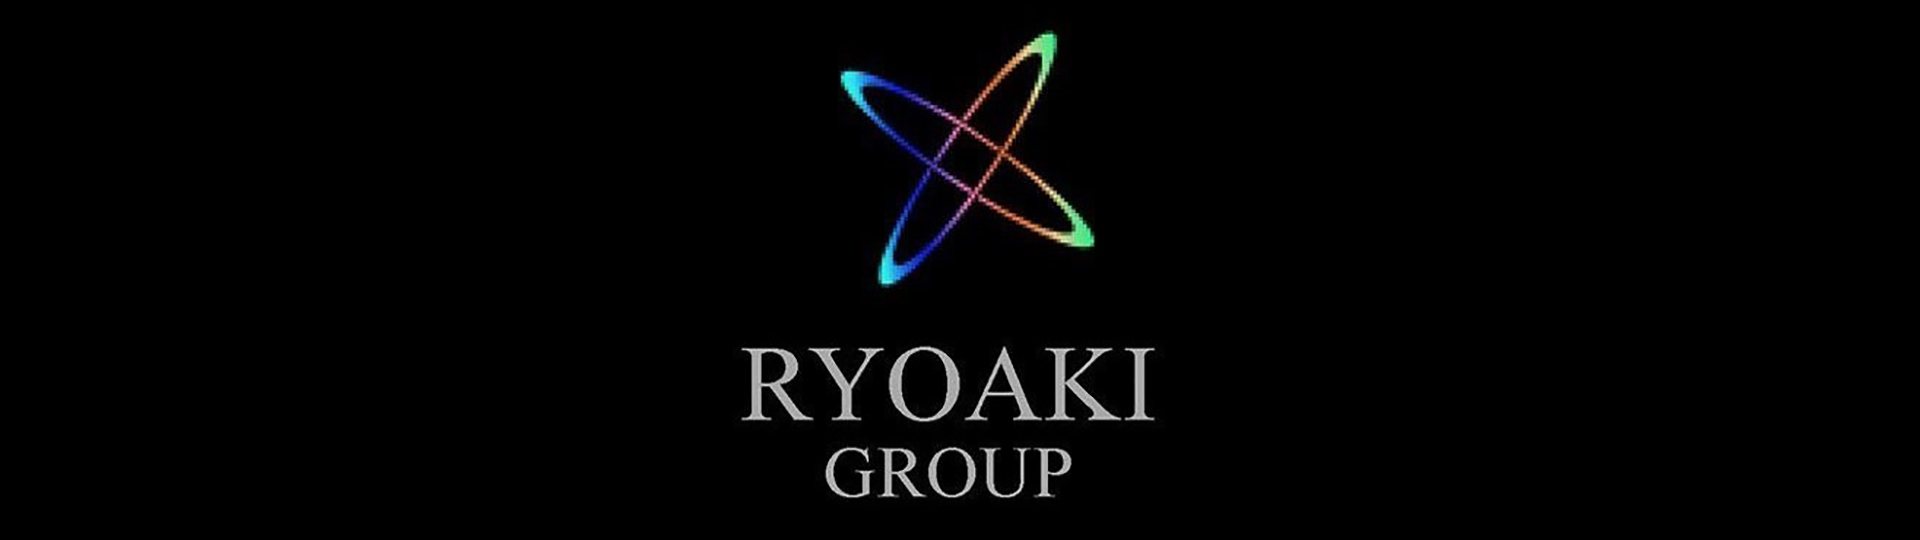 RyoAki Group